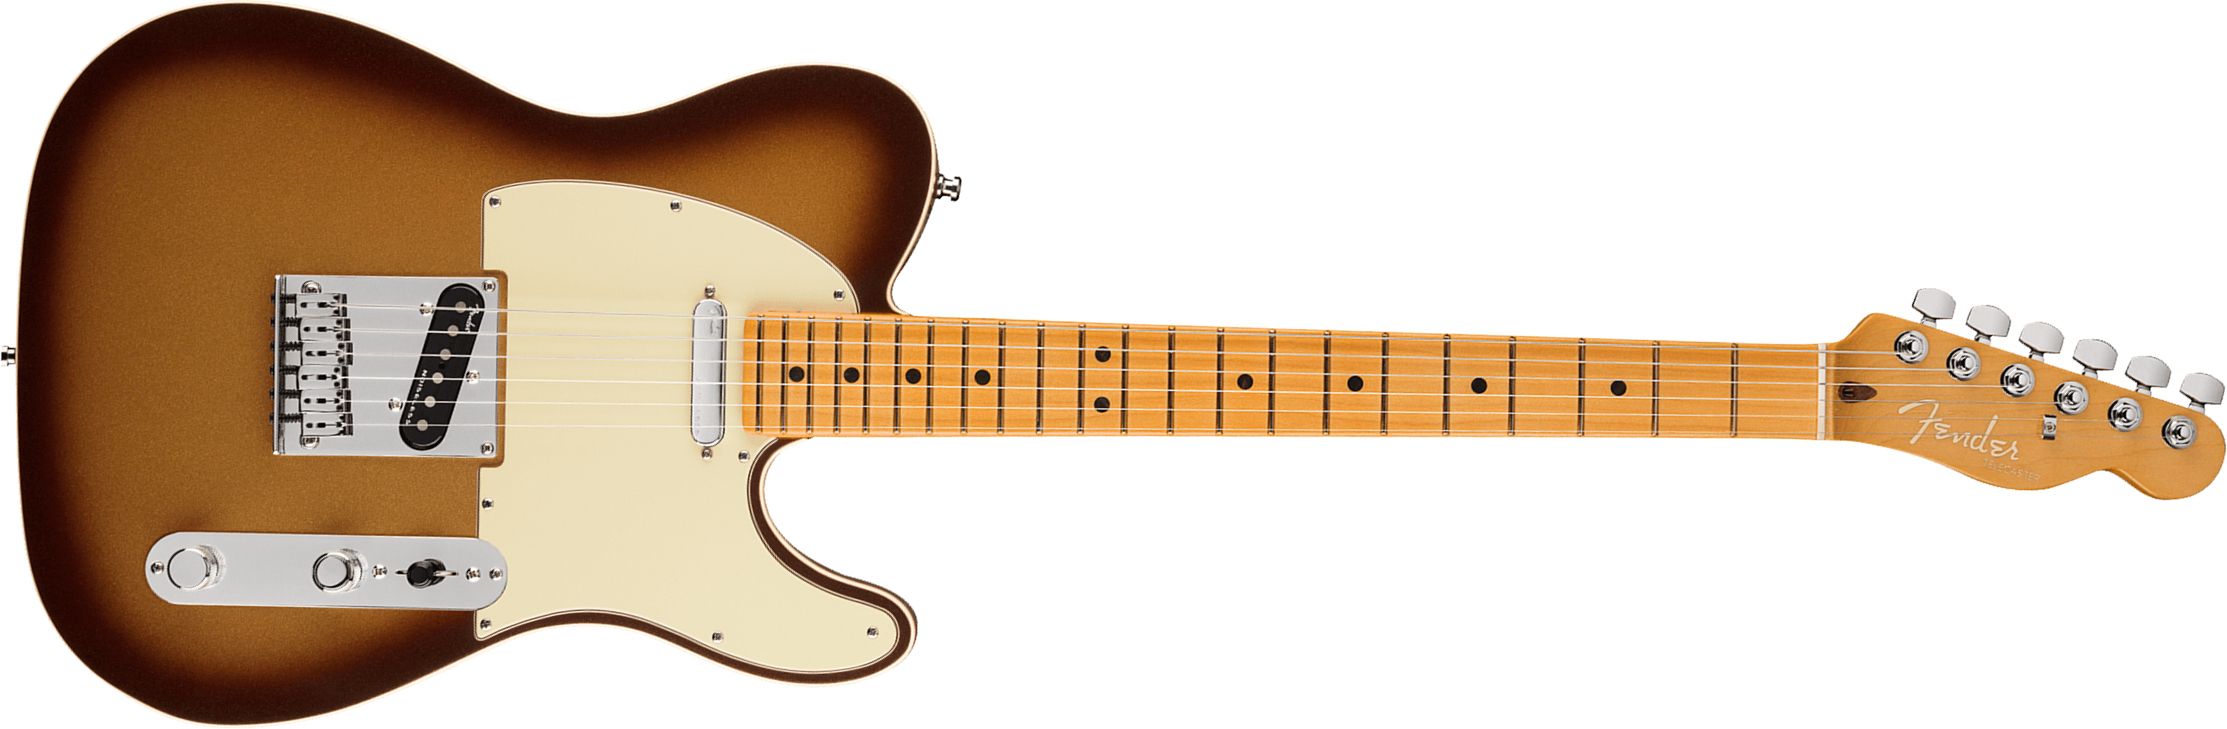 Fender Tele American Ultra 2019 Usa Mn - Mocha Burst - Televorm elektrische gitaar - Main picture